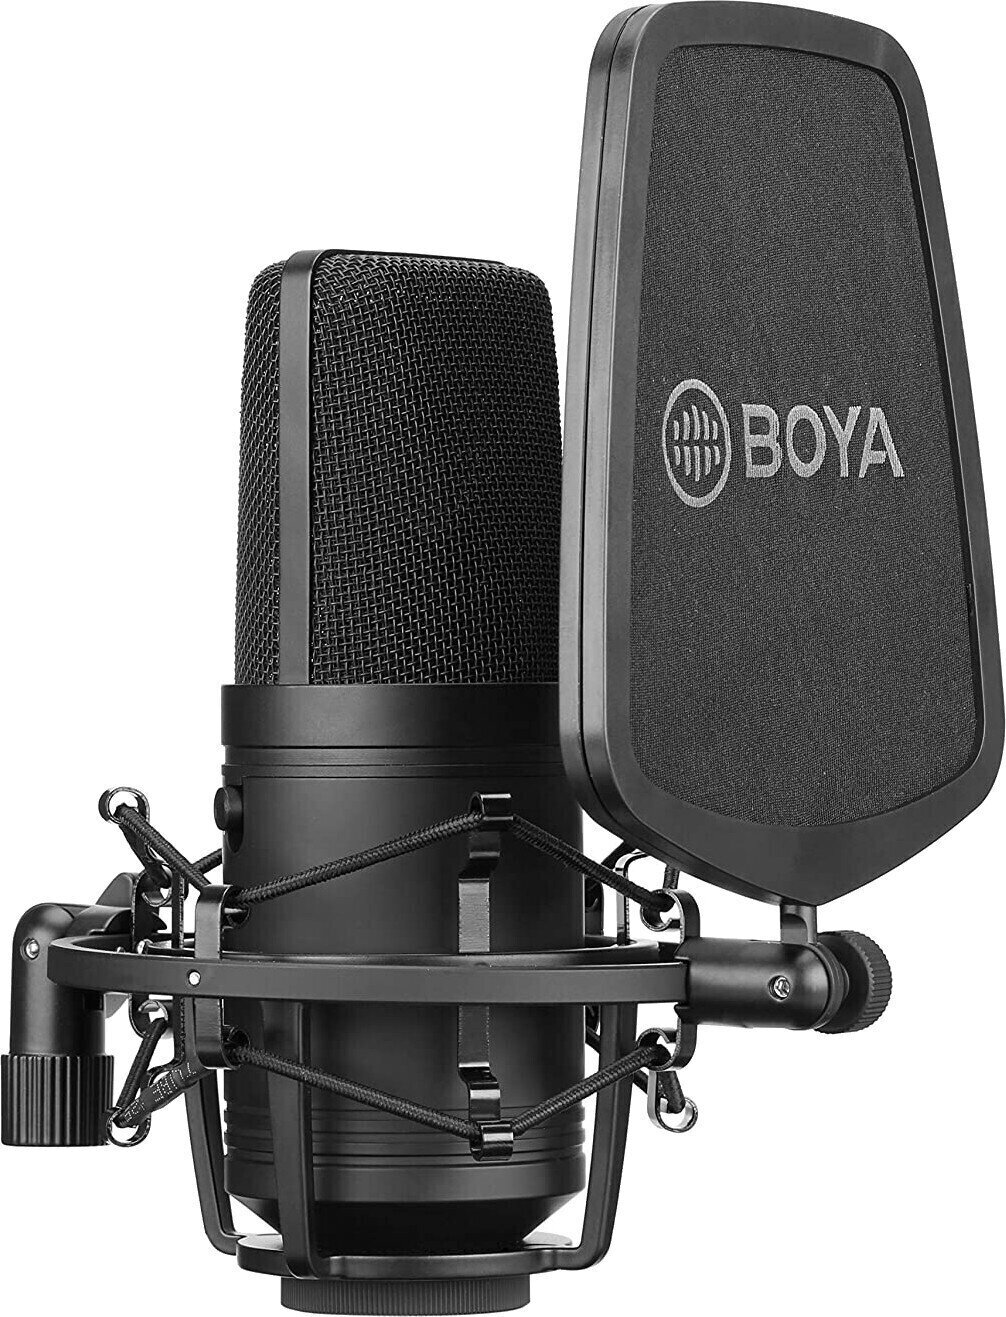 Studio Condenser Microphone BOYA BY-M800 Studio Condenser Microphone